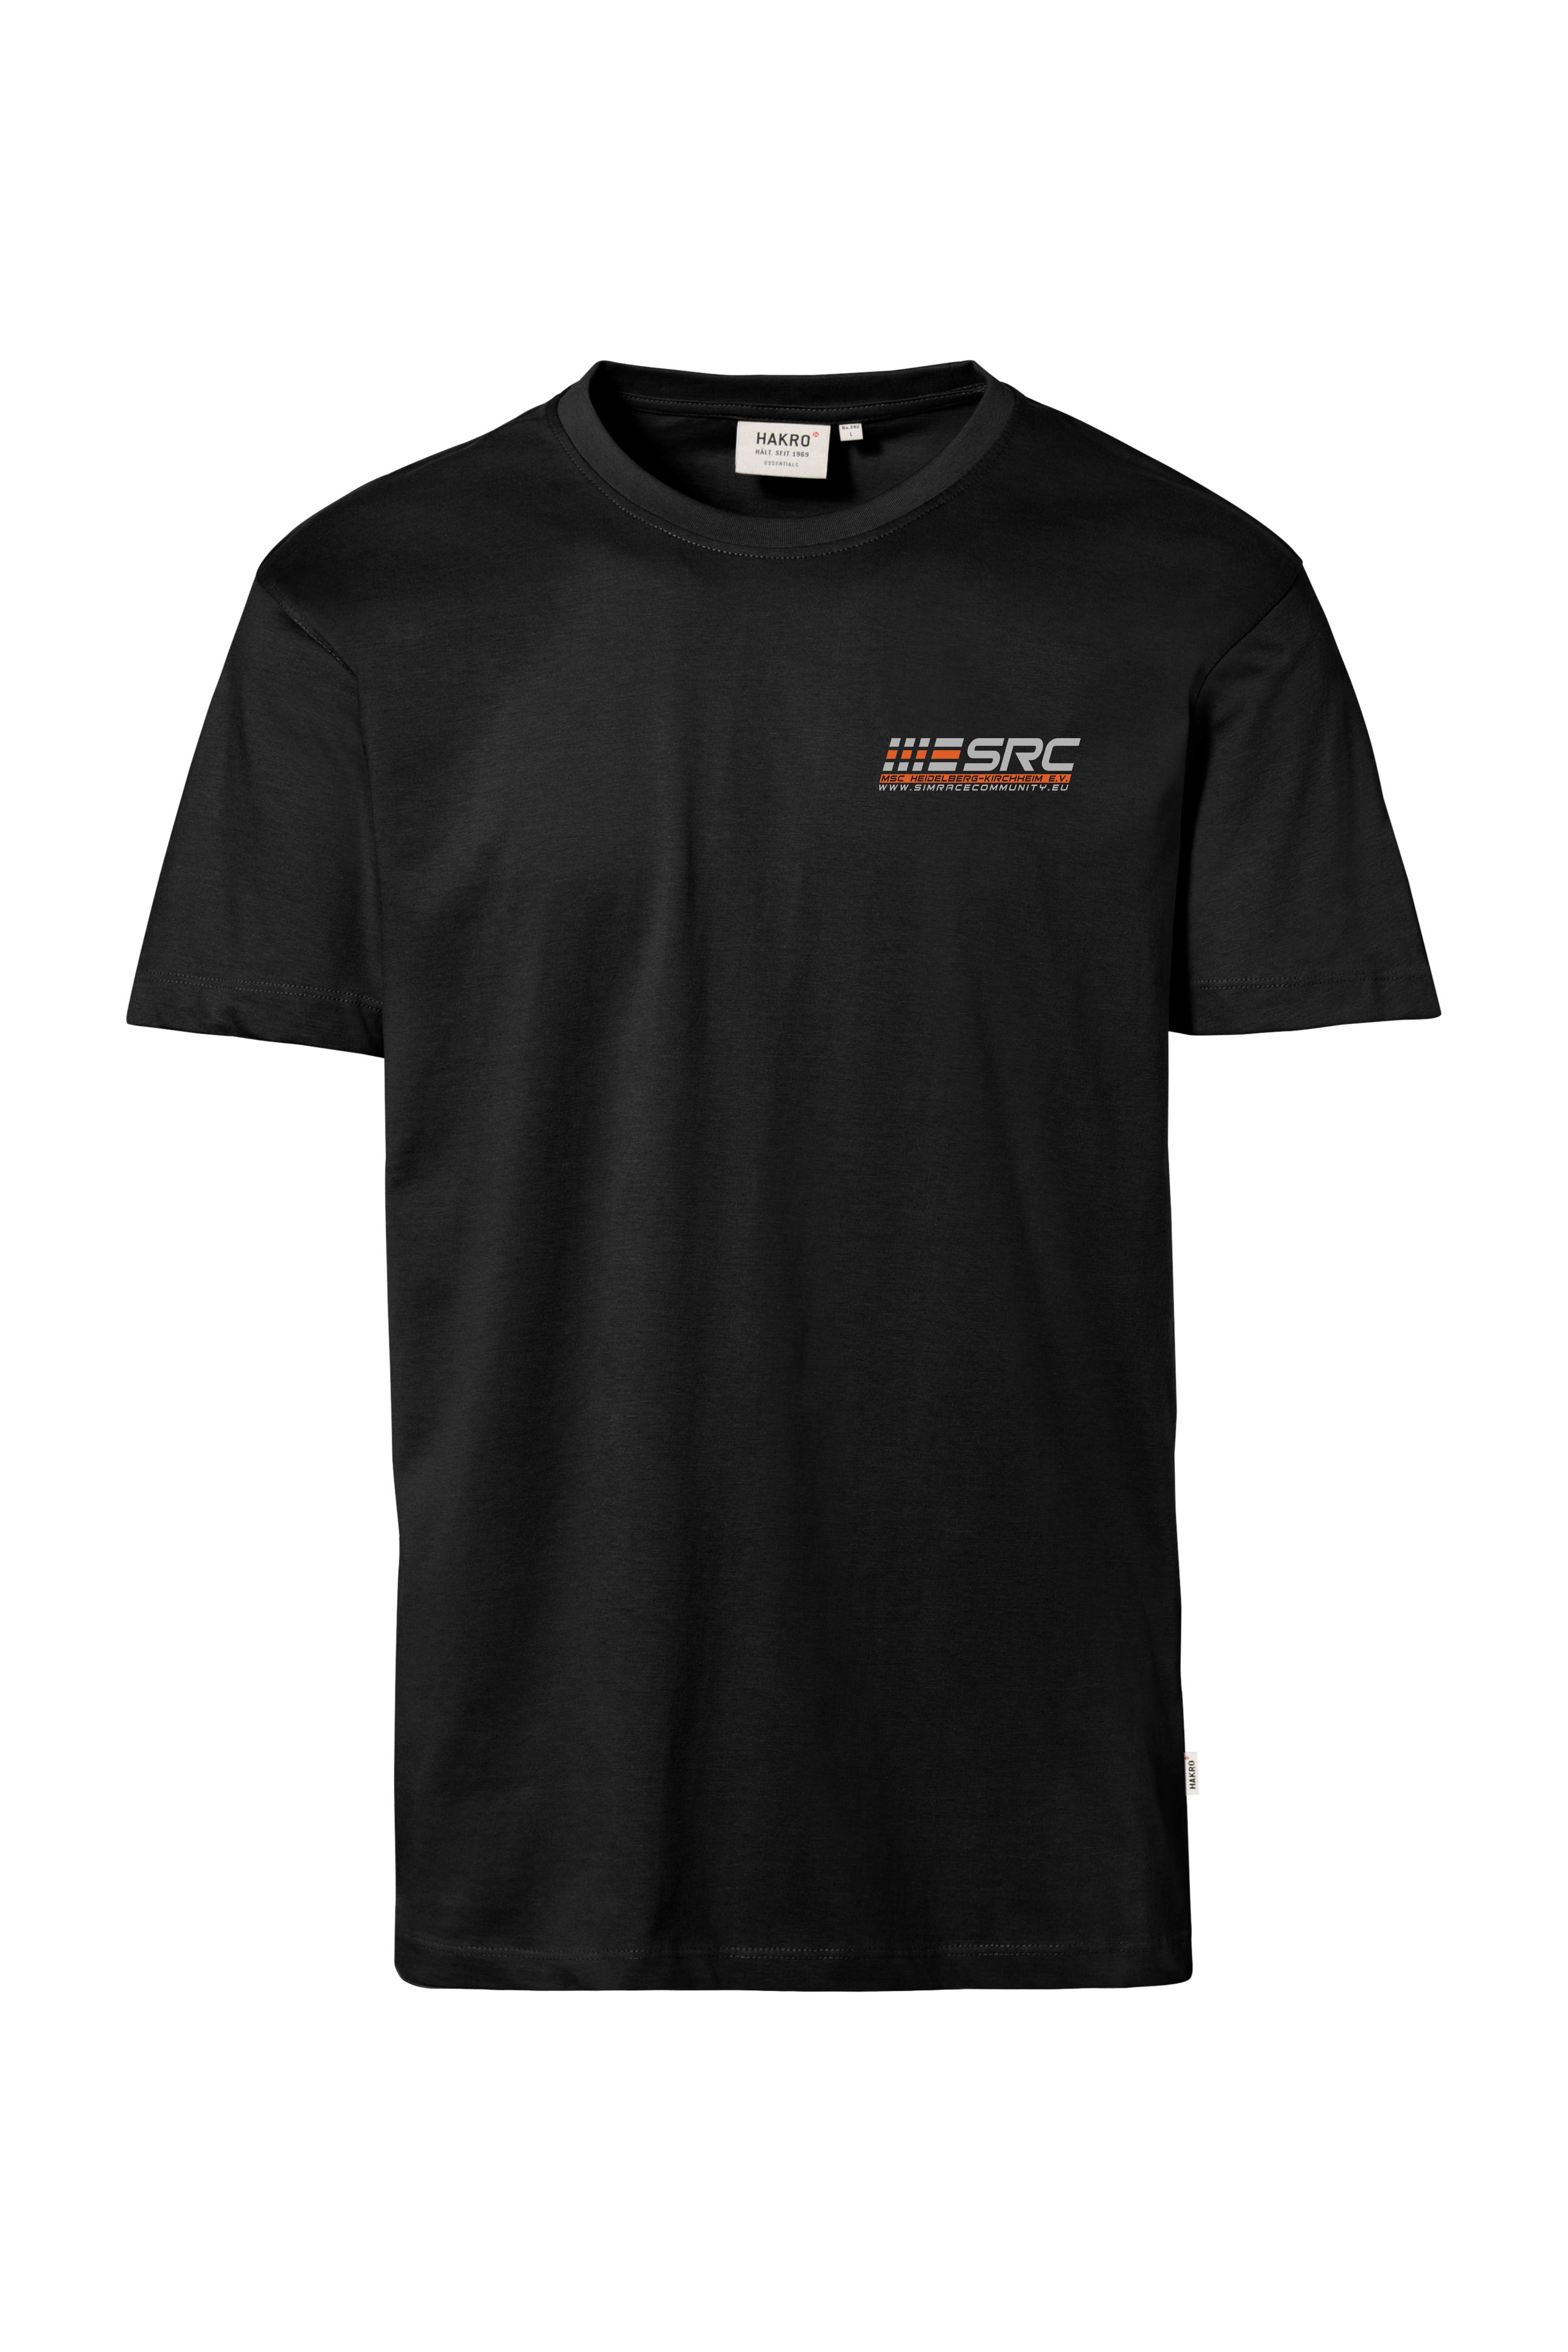 SRC T-Shirt Classic